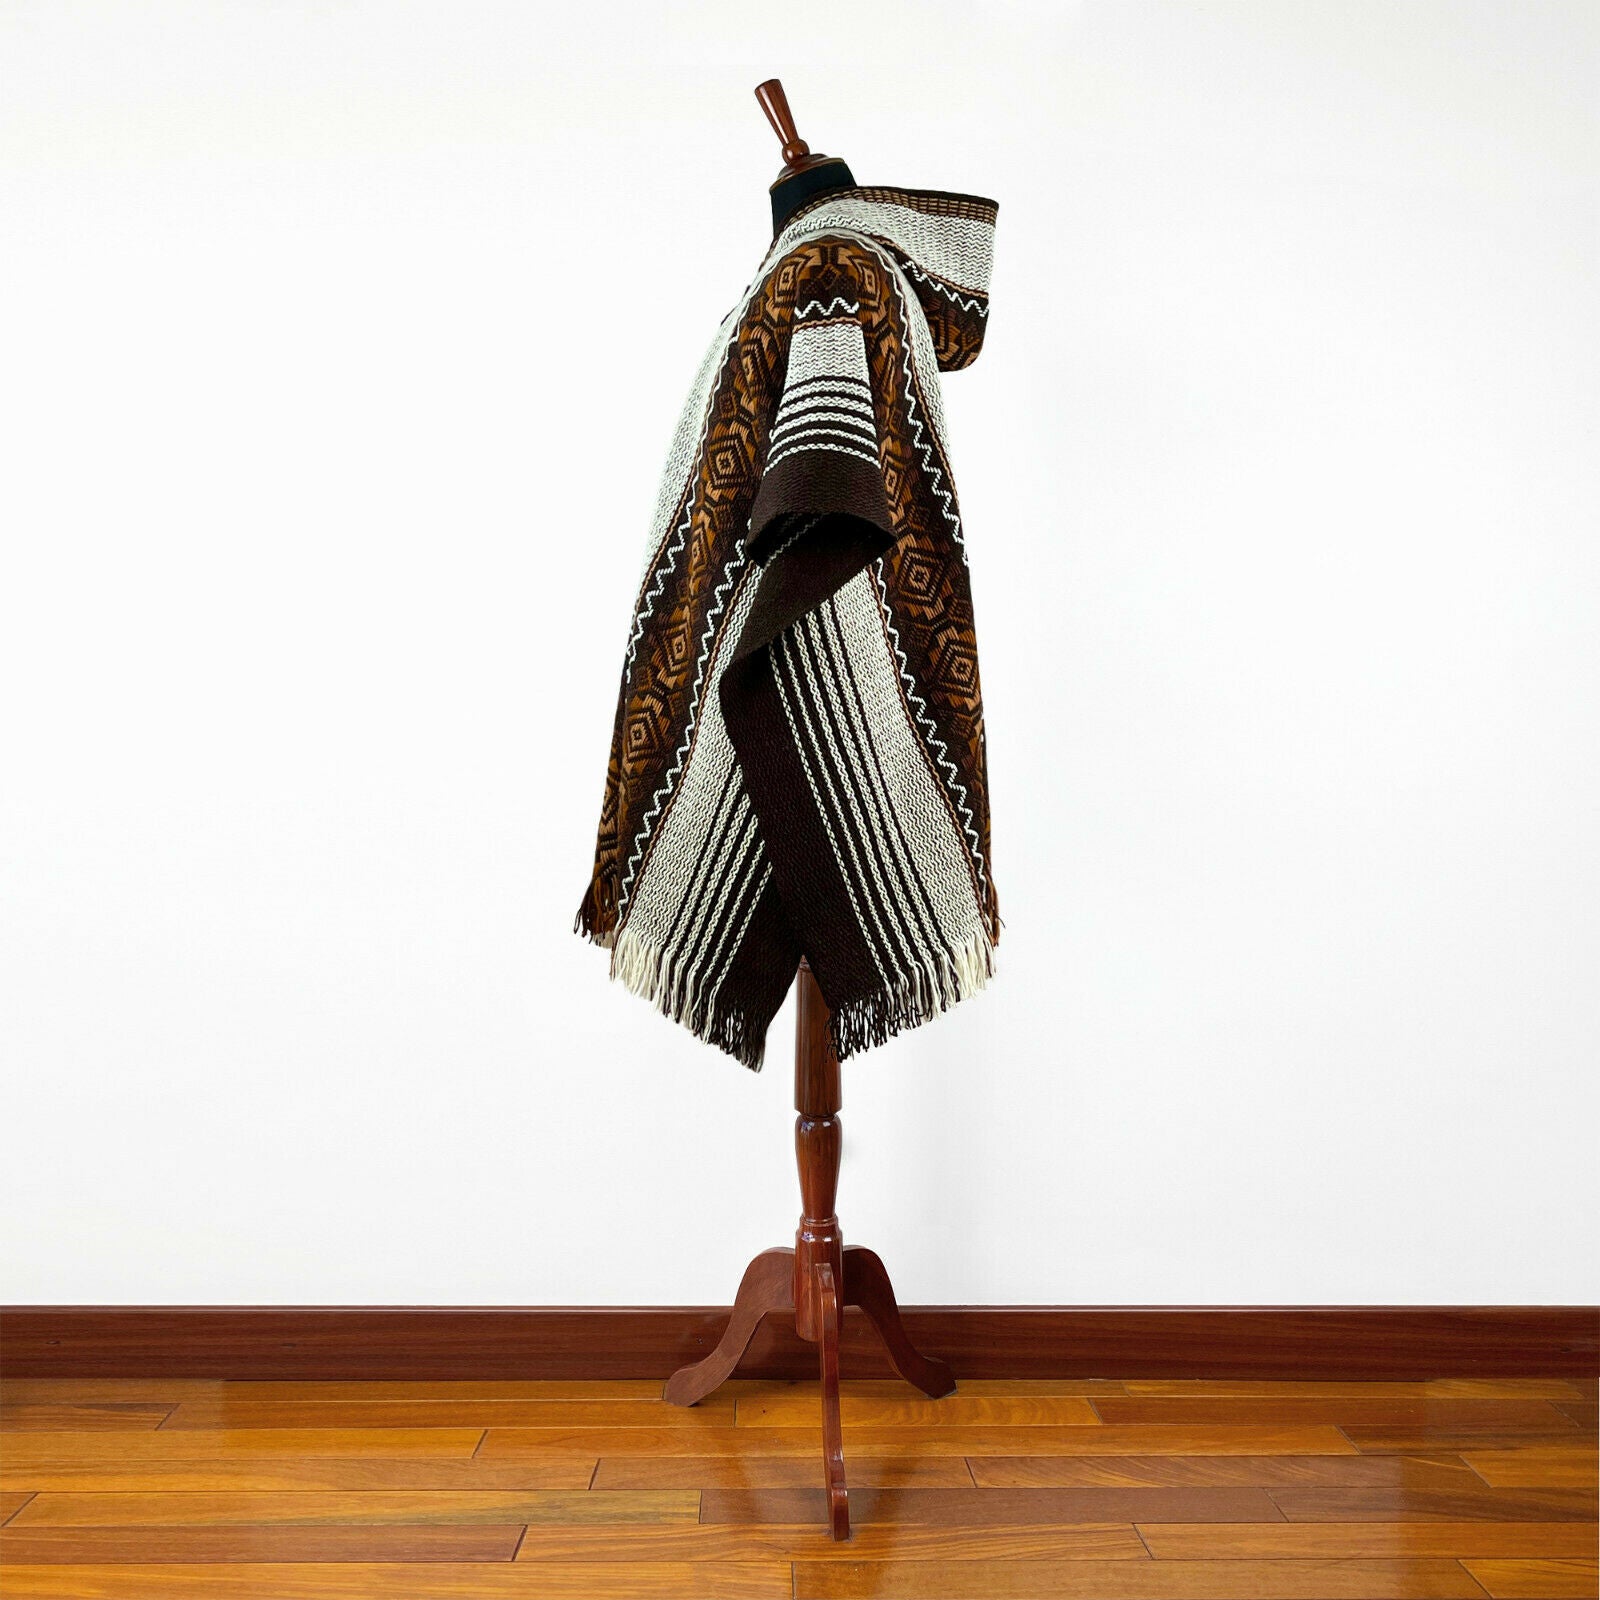 Tumbucutza - Llama Wool Unisex South American Handwoven Hooded Poncho - brown with diamonds pattern